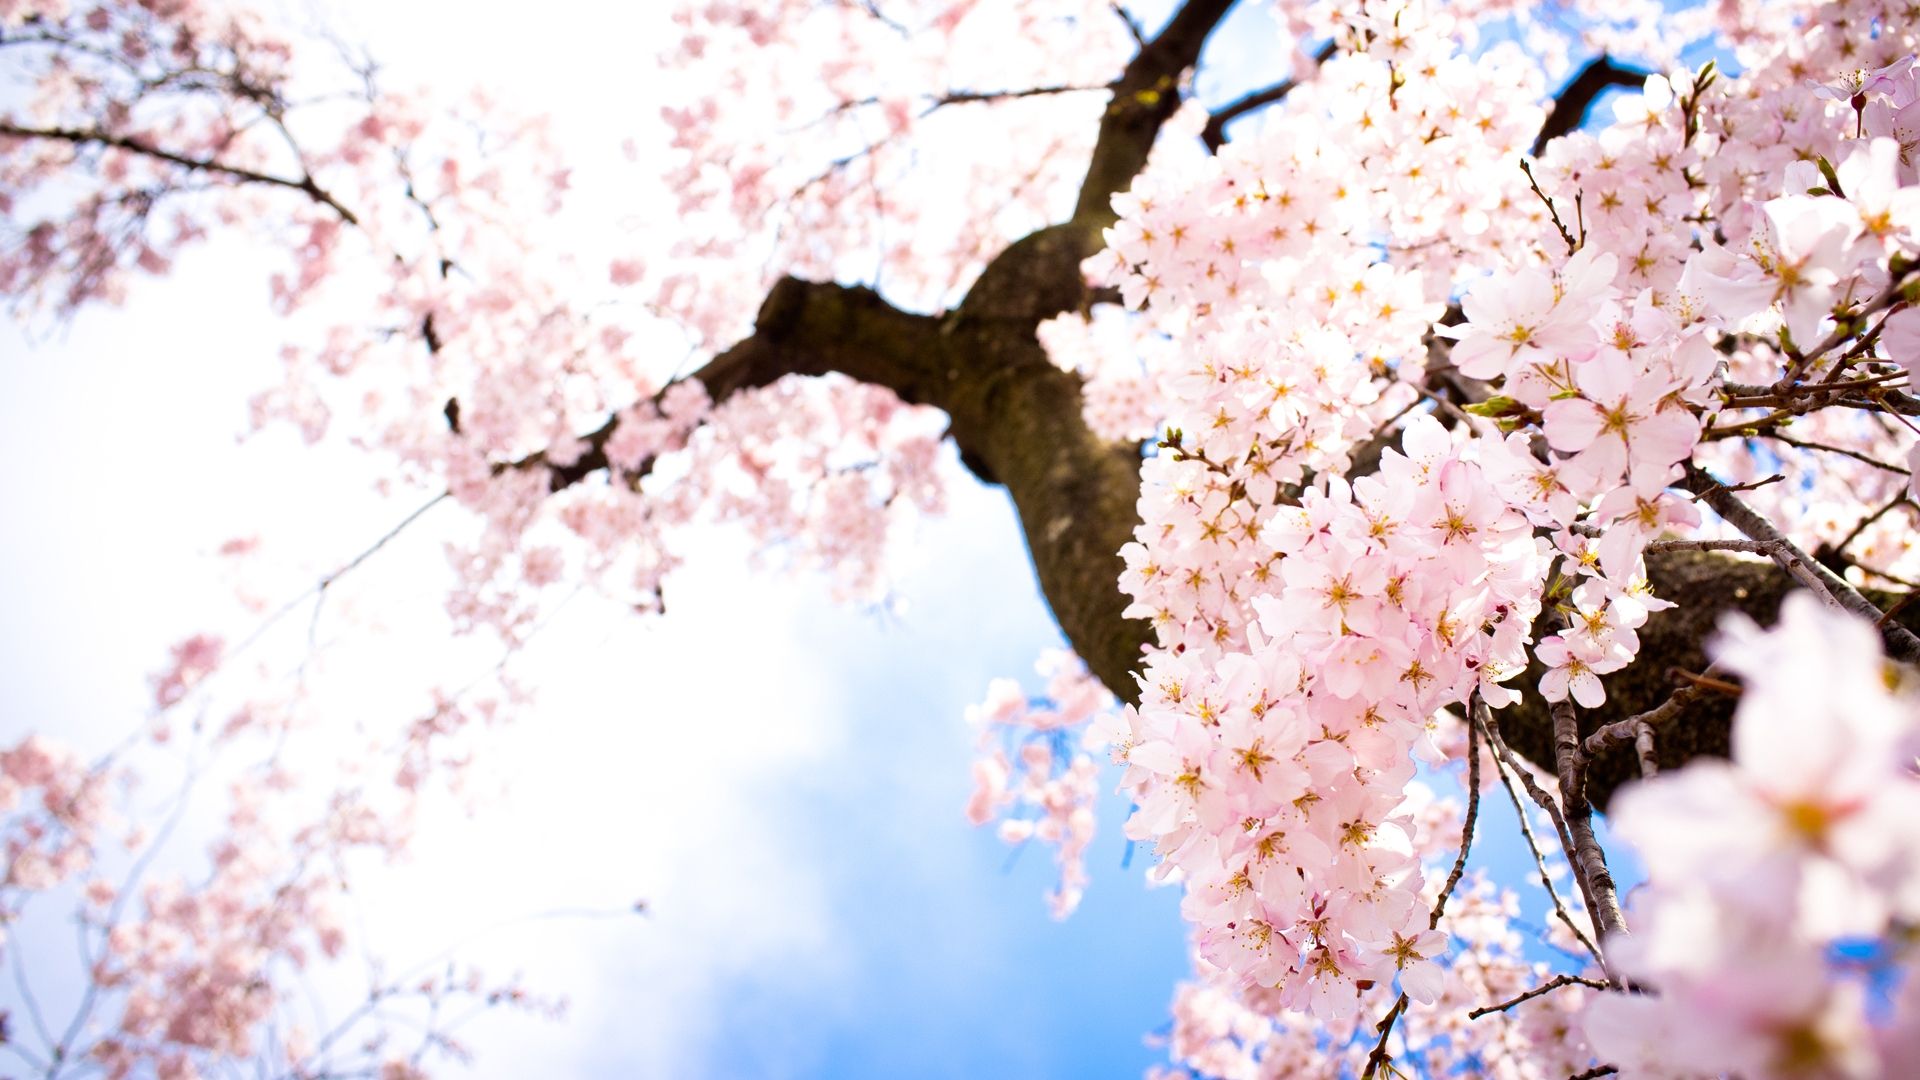 265 Cherry Blossom Wallpaper Anime Images Stock Photos  Vectors   Shutterstock